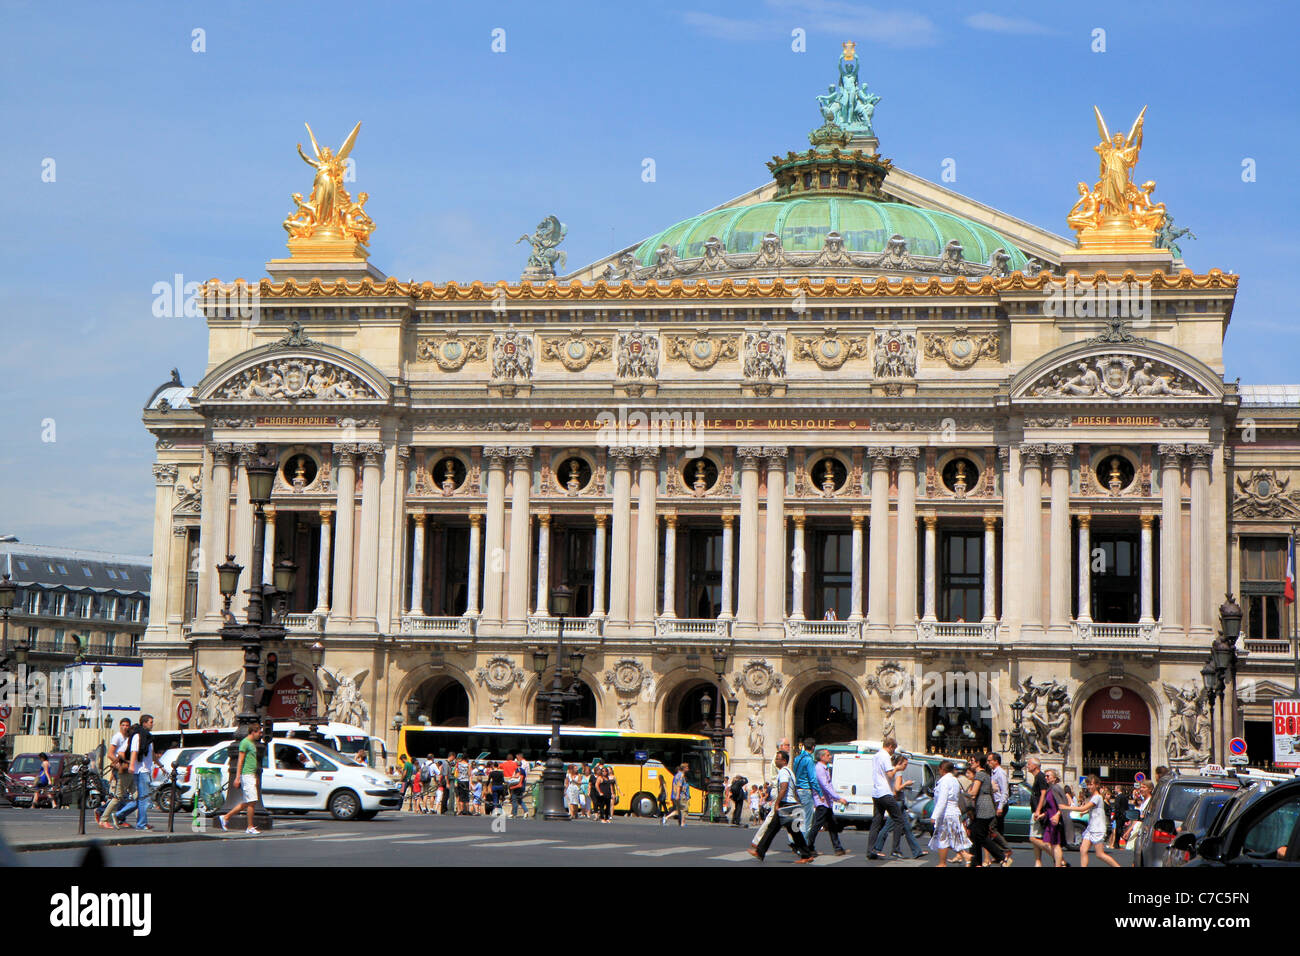 Vista exterior de la Ópera Garnier, París, Francia Foto de stock